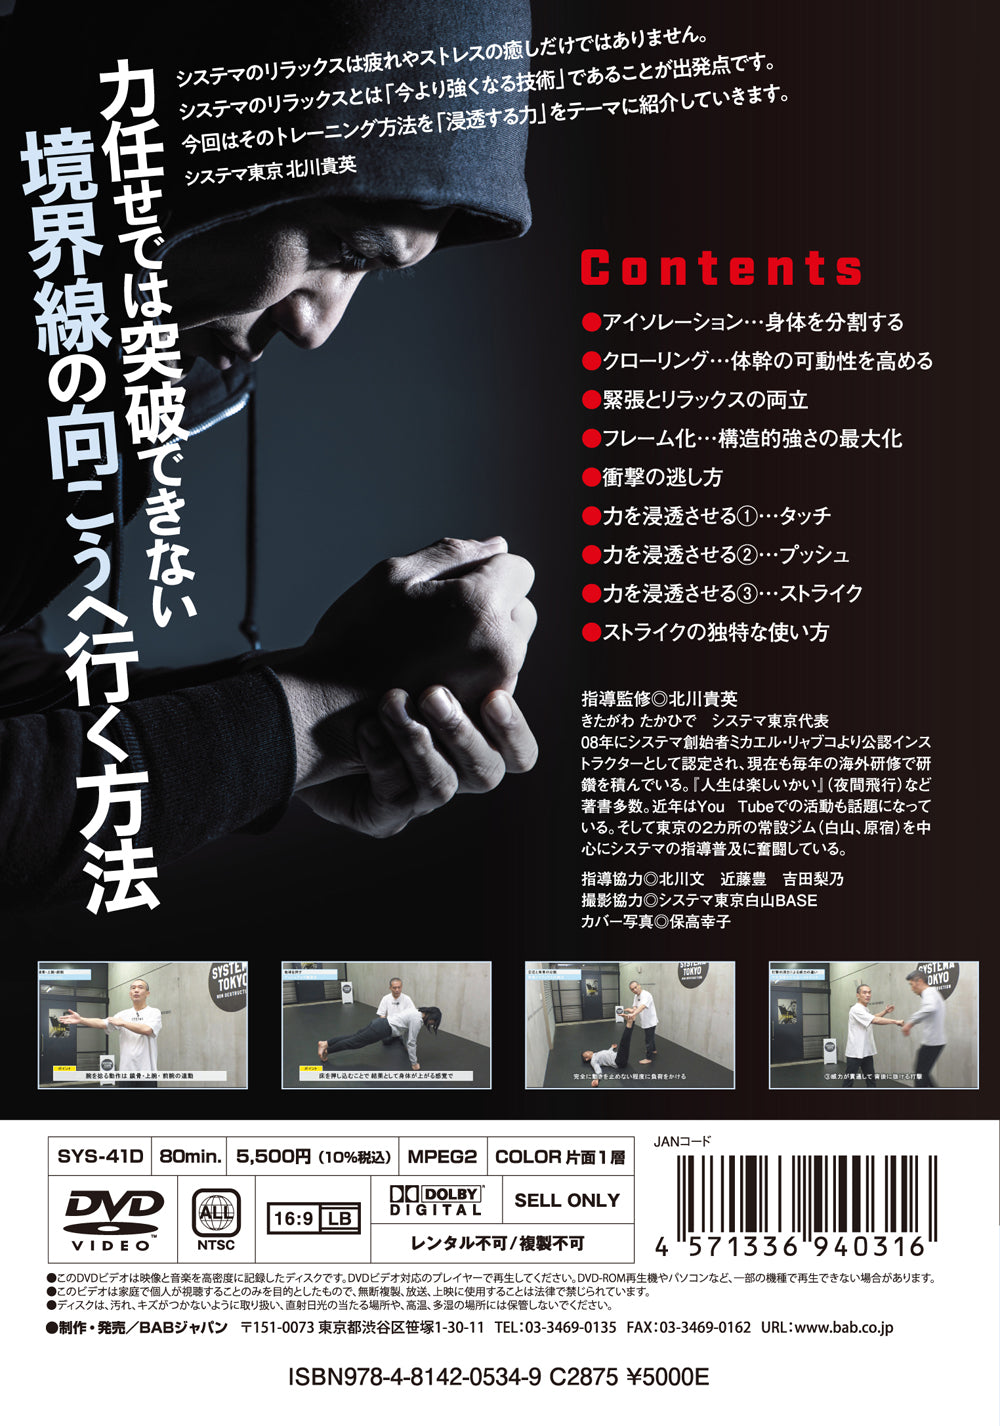 Systema Tokyo Poder penetrante DVD de Takahide Kitagawa